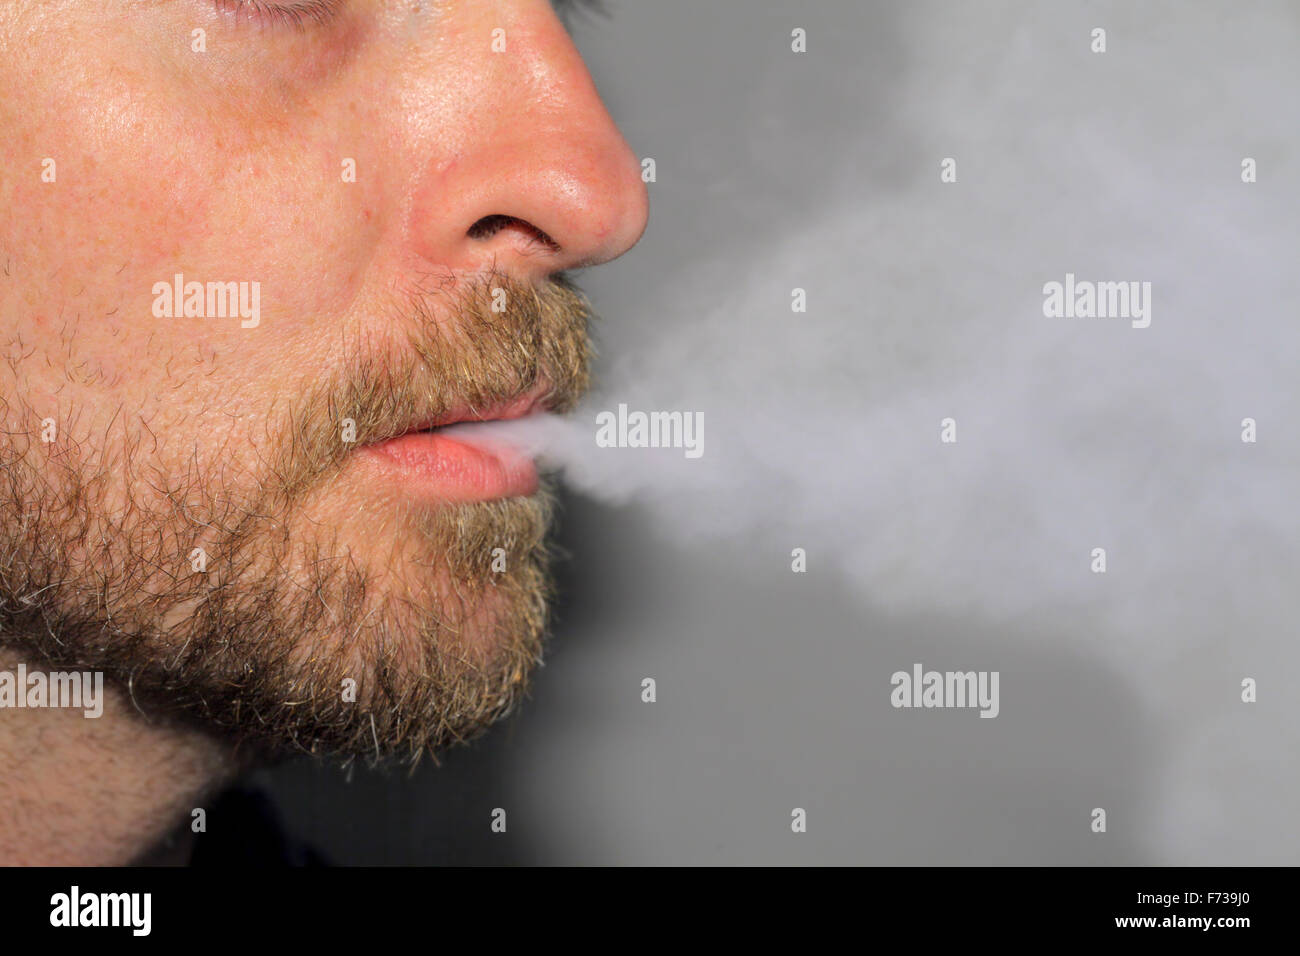 Bearded man exhaling vapor from an e-cigarette. Stock Photo